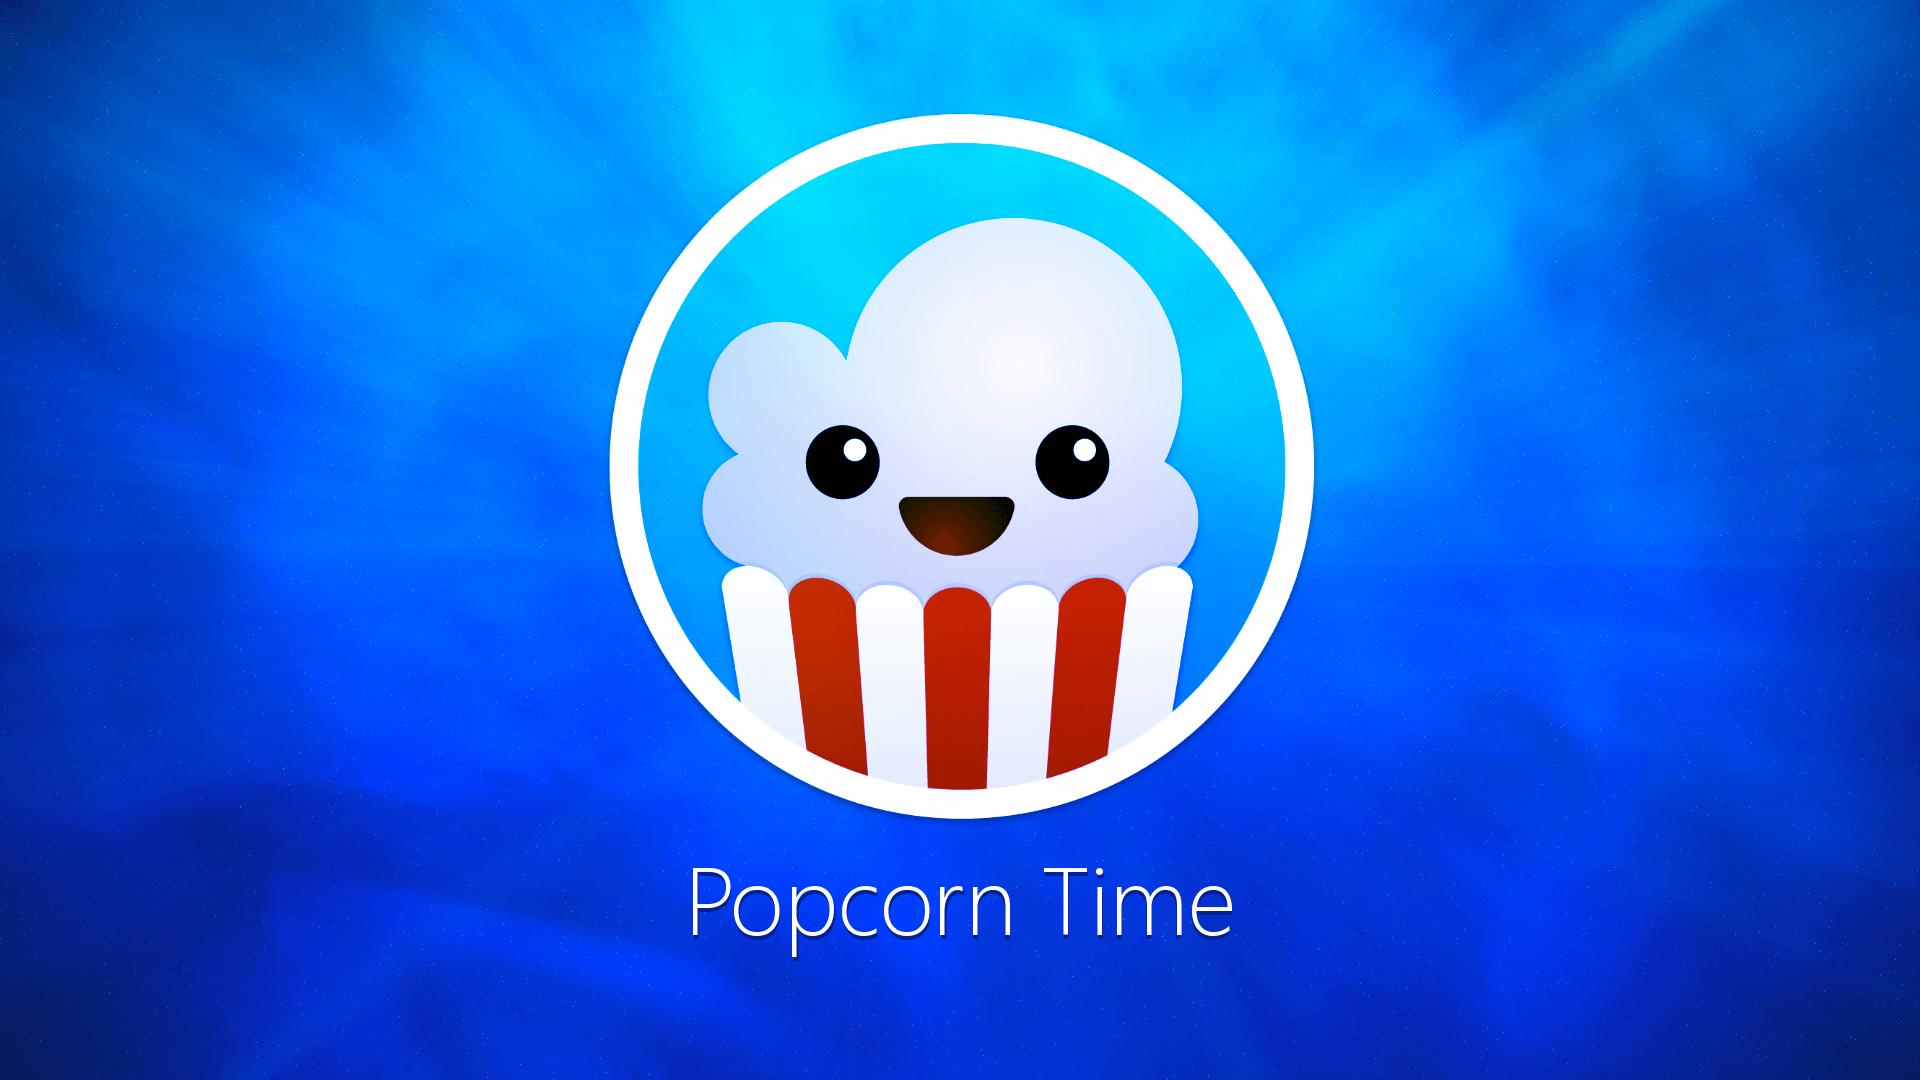 Popcorn Time wallpaper - 'Blue Space'